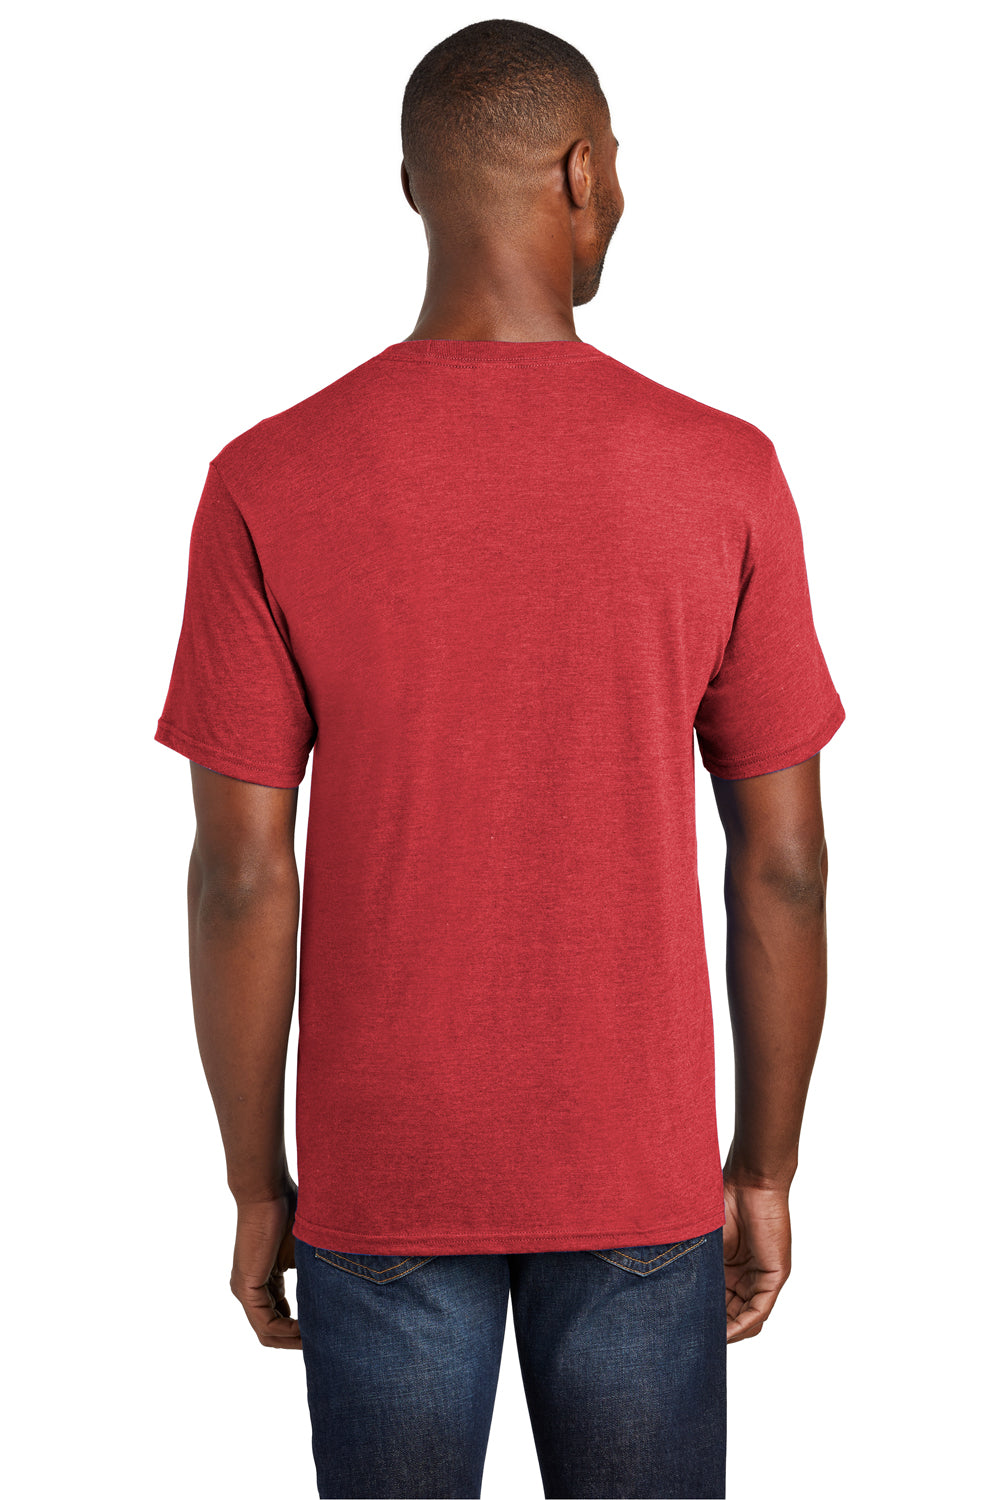 Port & Company PC455 Mens Fan Favorite Short Sleeve Crewneck T-Shirt Heather Cardinal Red Back